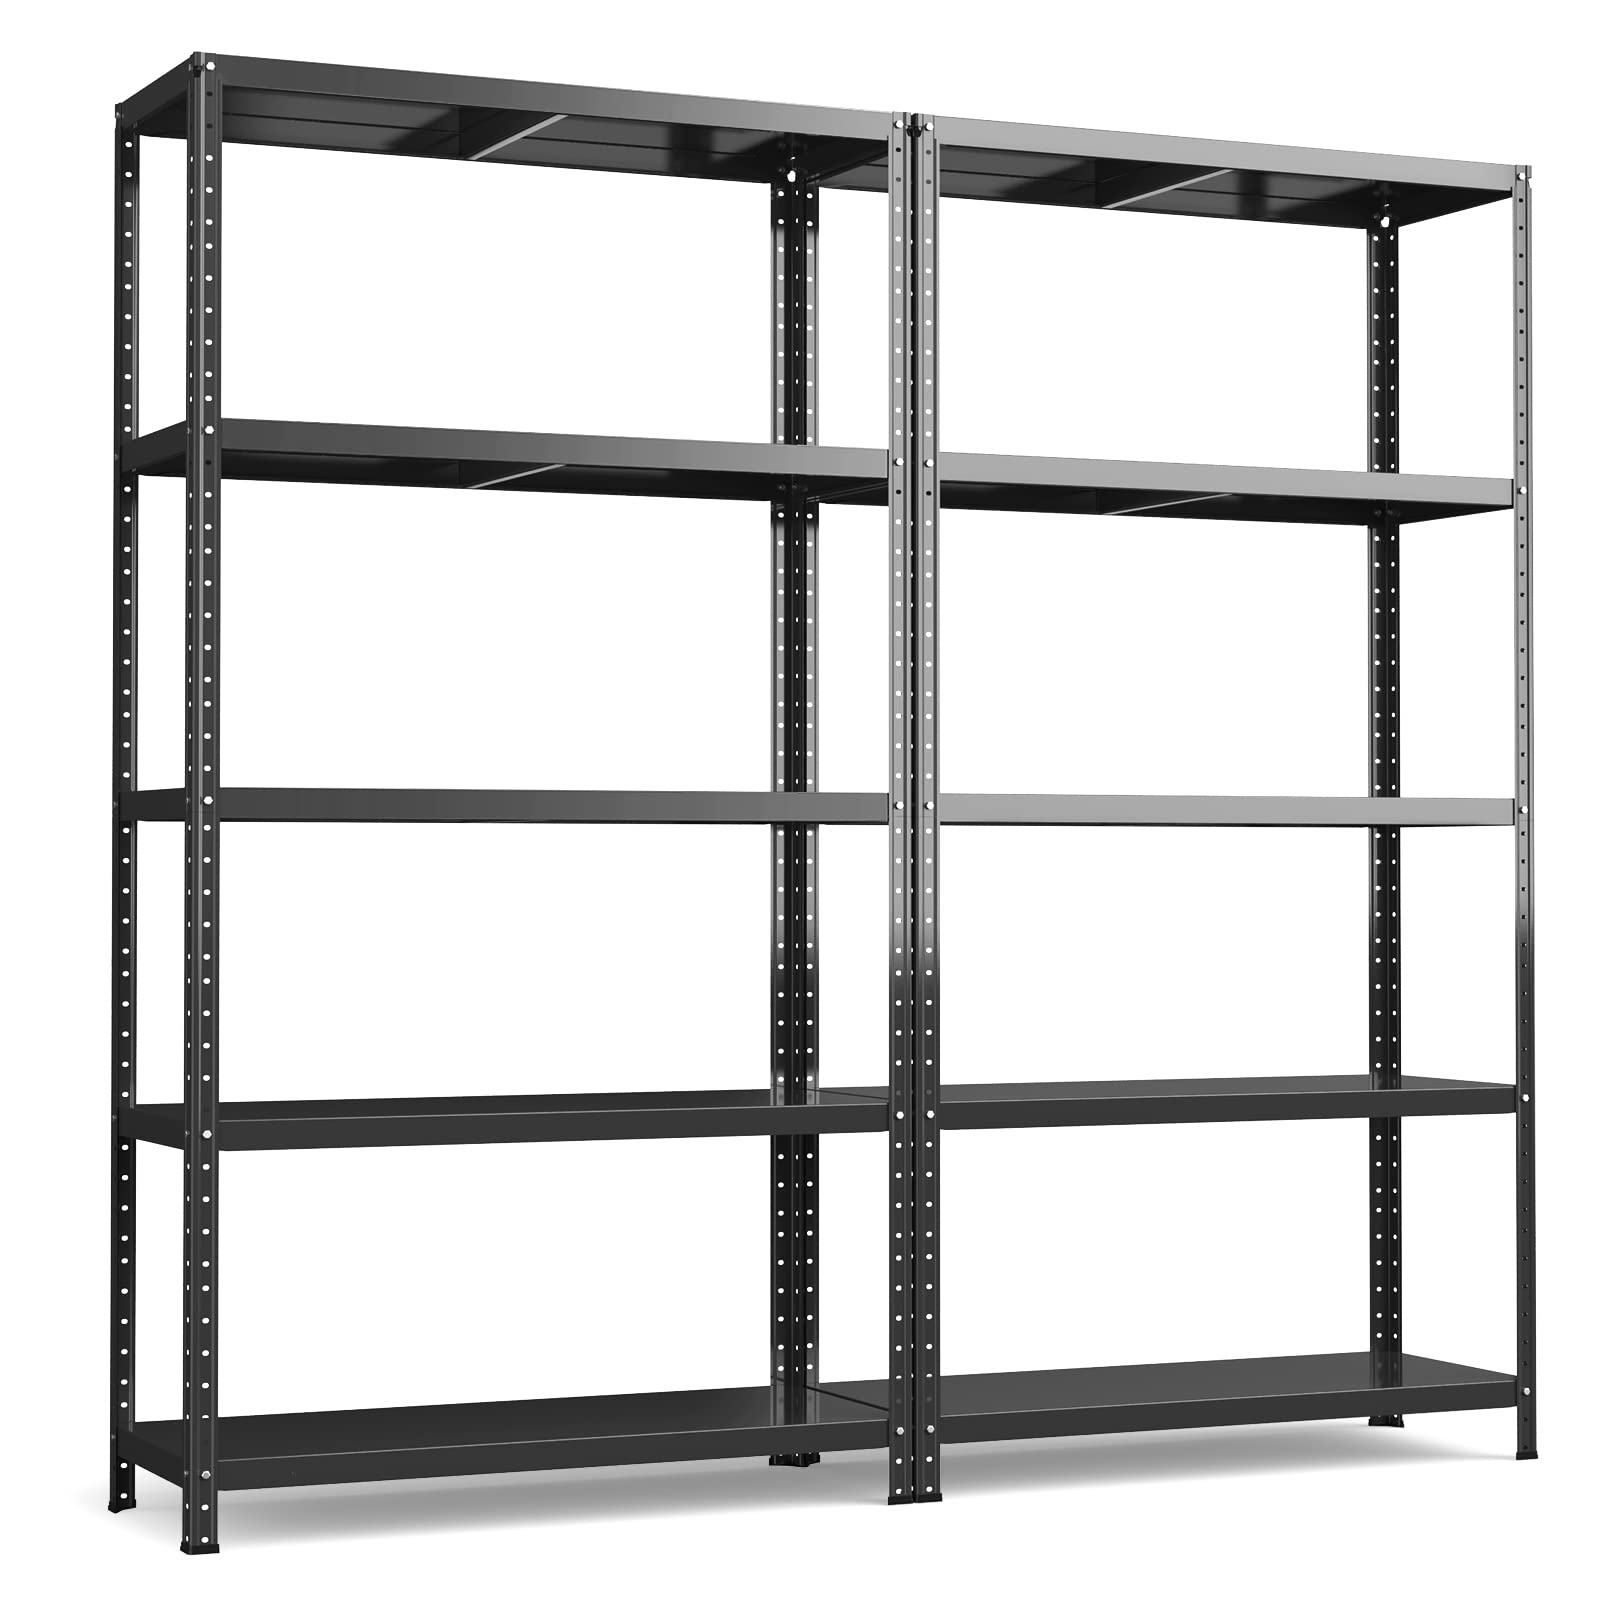 Giantex 5-Tier Storage Shelves